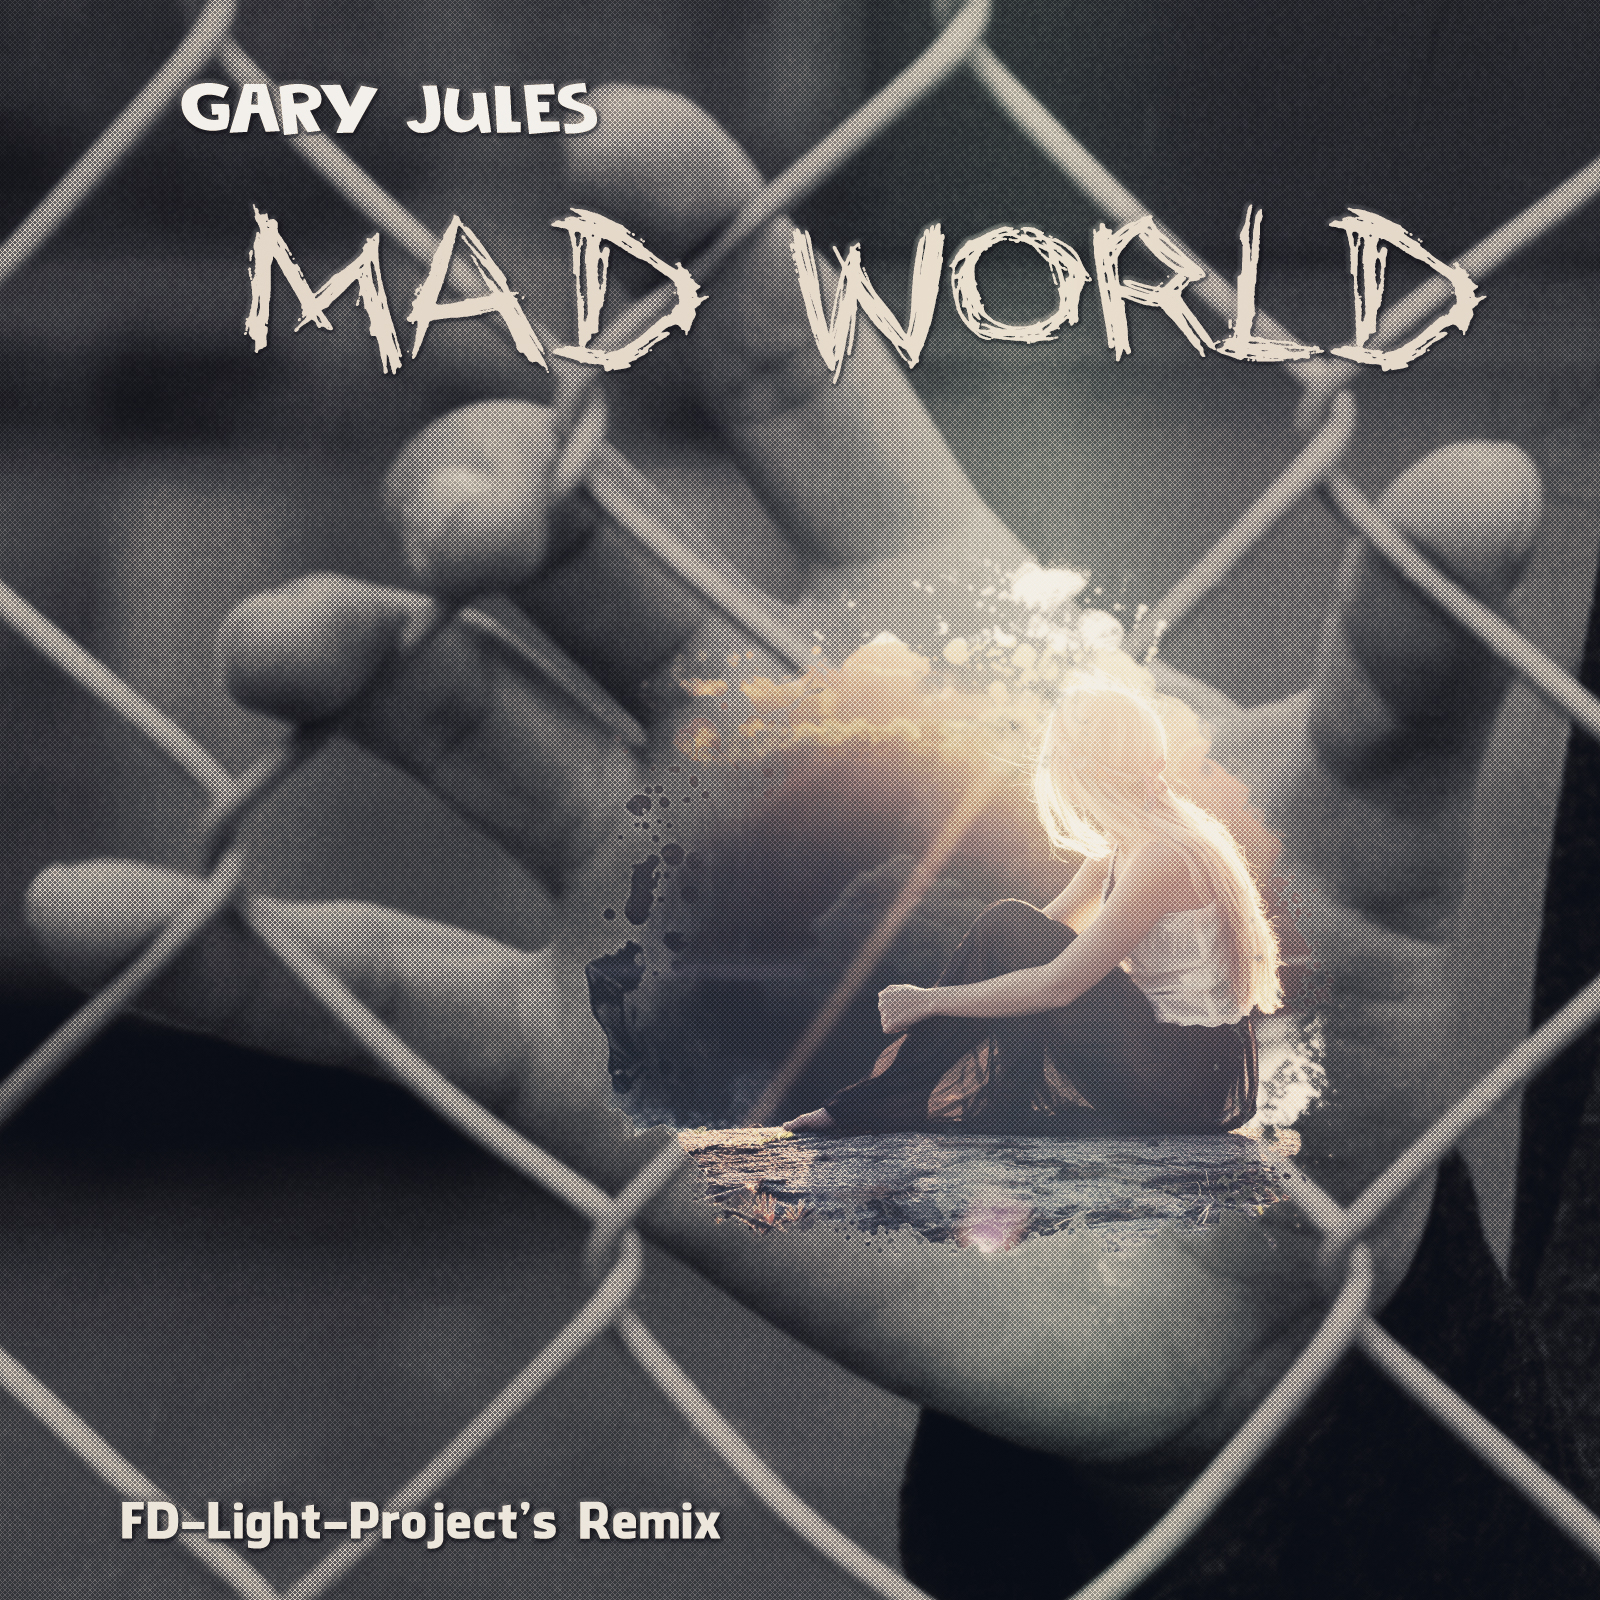 Mad World Gary Jules Fd-light-Project's remix